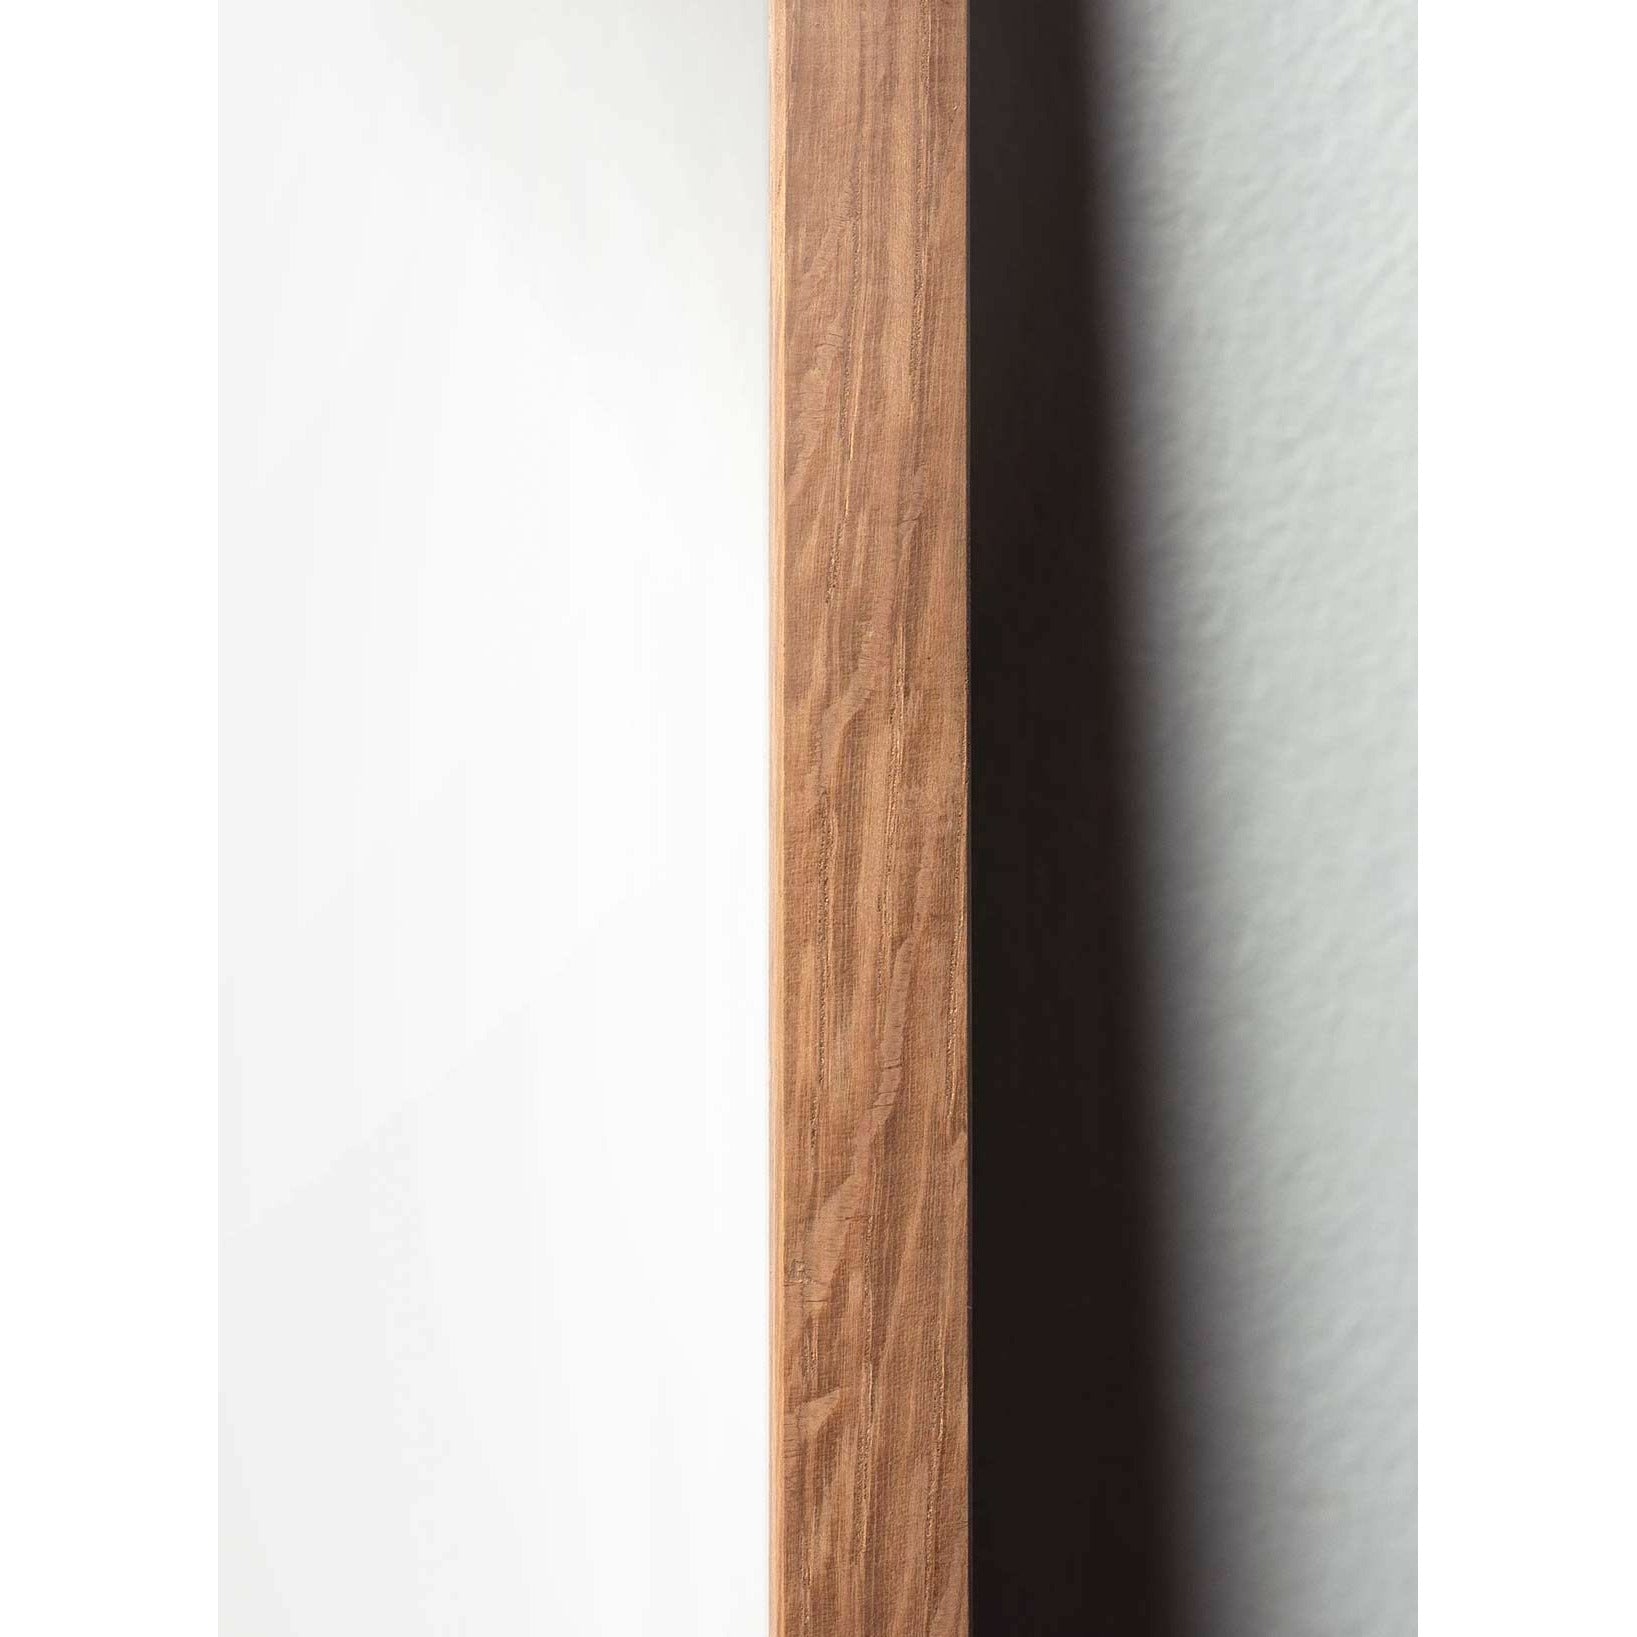 Póster clásico de Pelikan Pelikan, marco hecho de madera clara de 70x100 cm, fondo negro